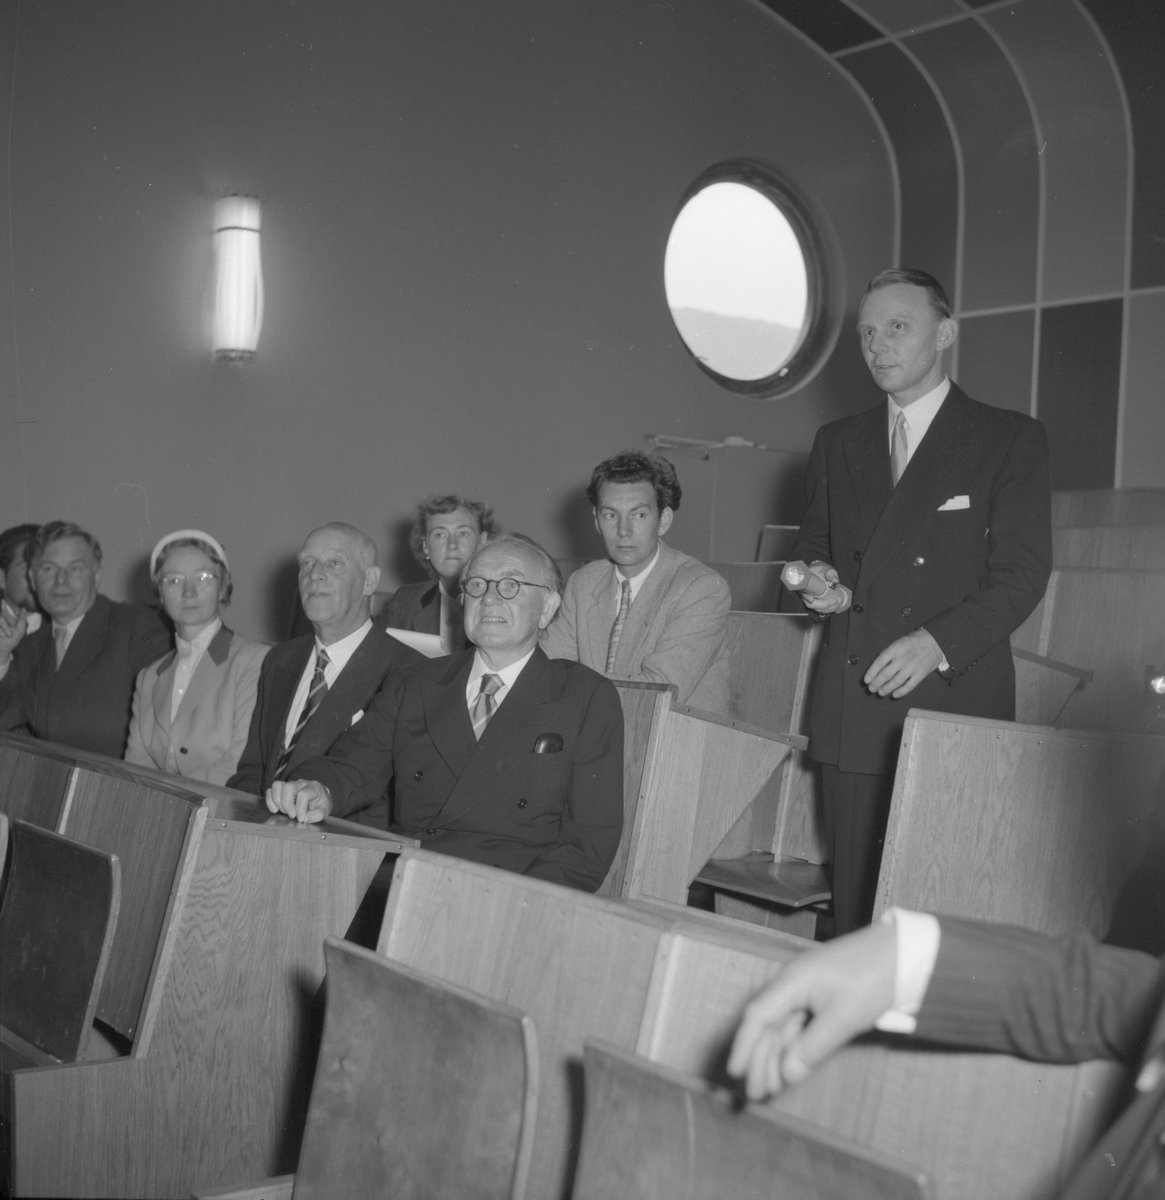 Innvielse av Narvik Tekniske skole 12.9. 1955. Rektor Knut Kobberstad foreleser i auditorium.
Birger Bergersen